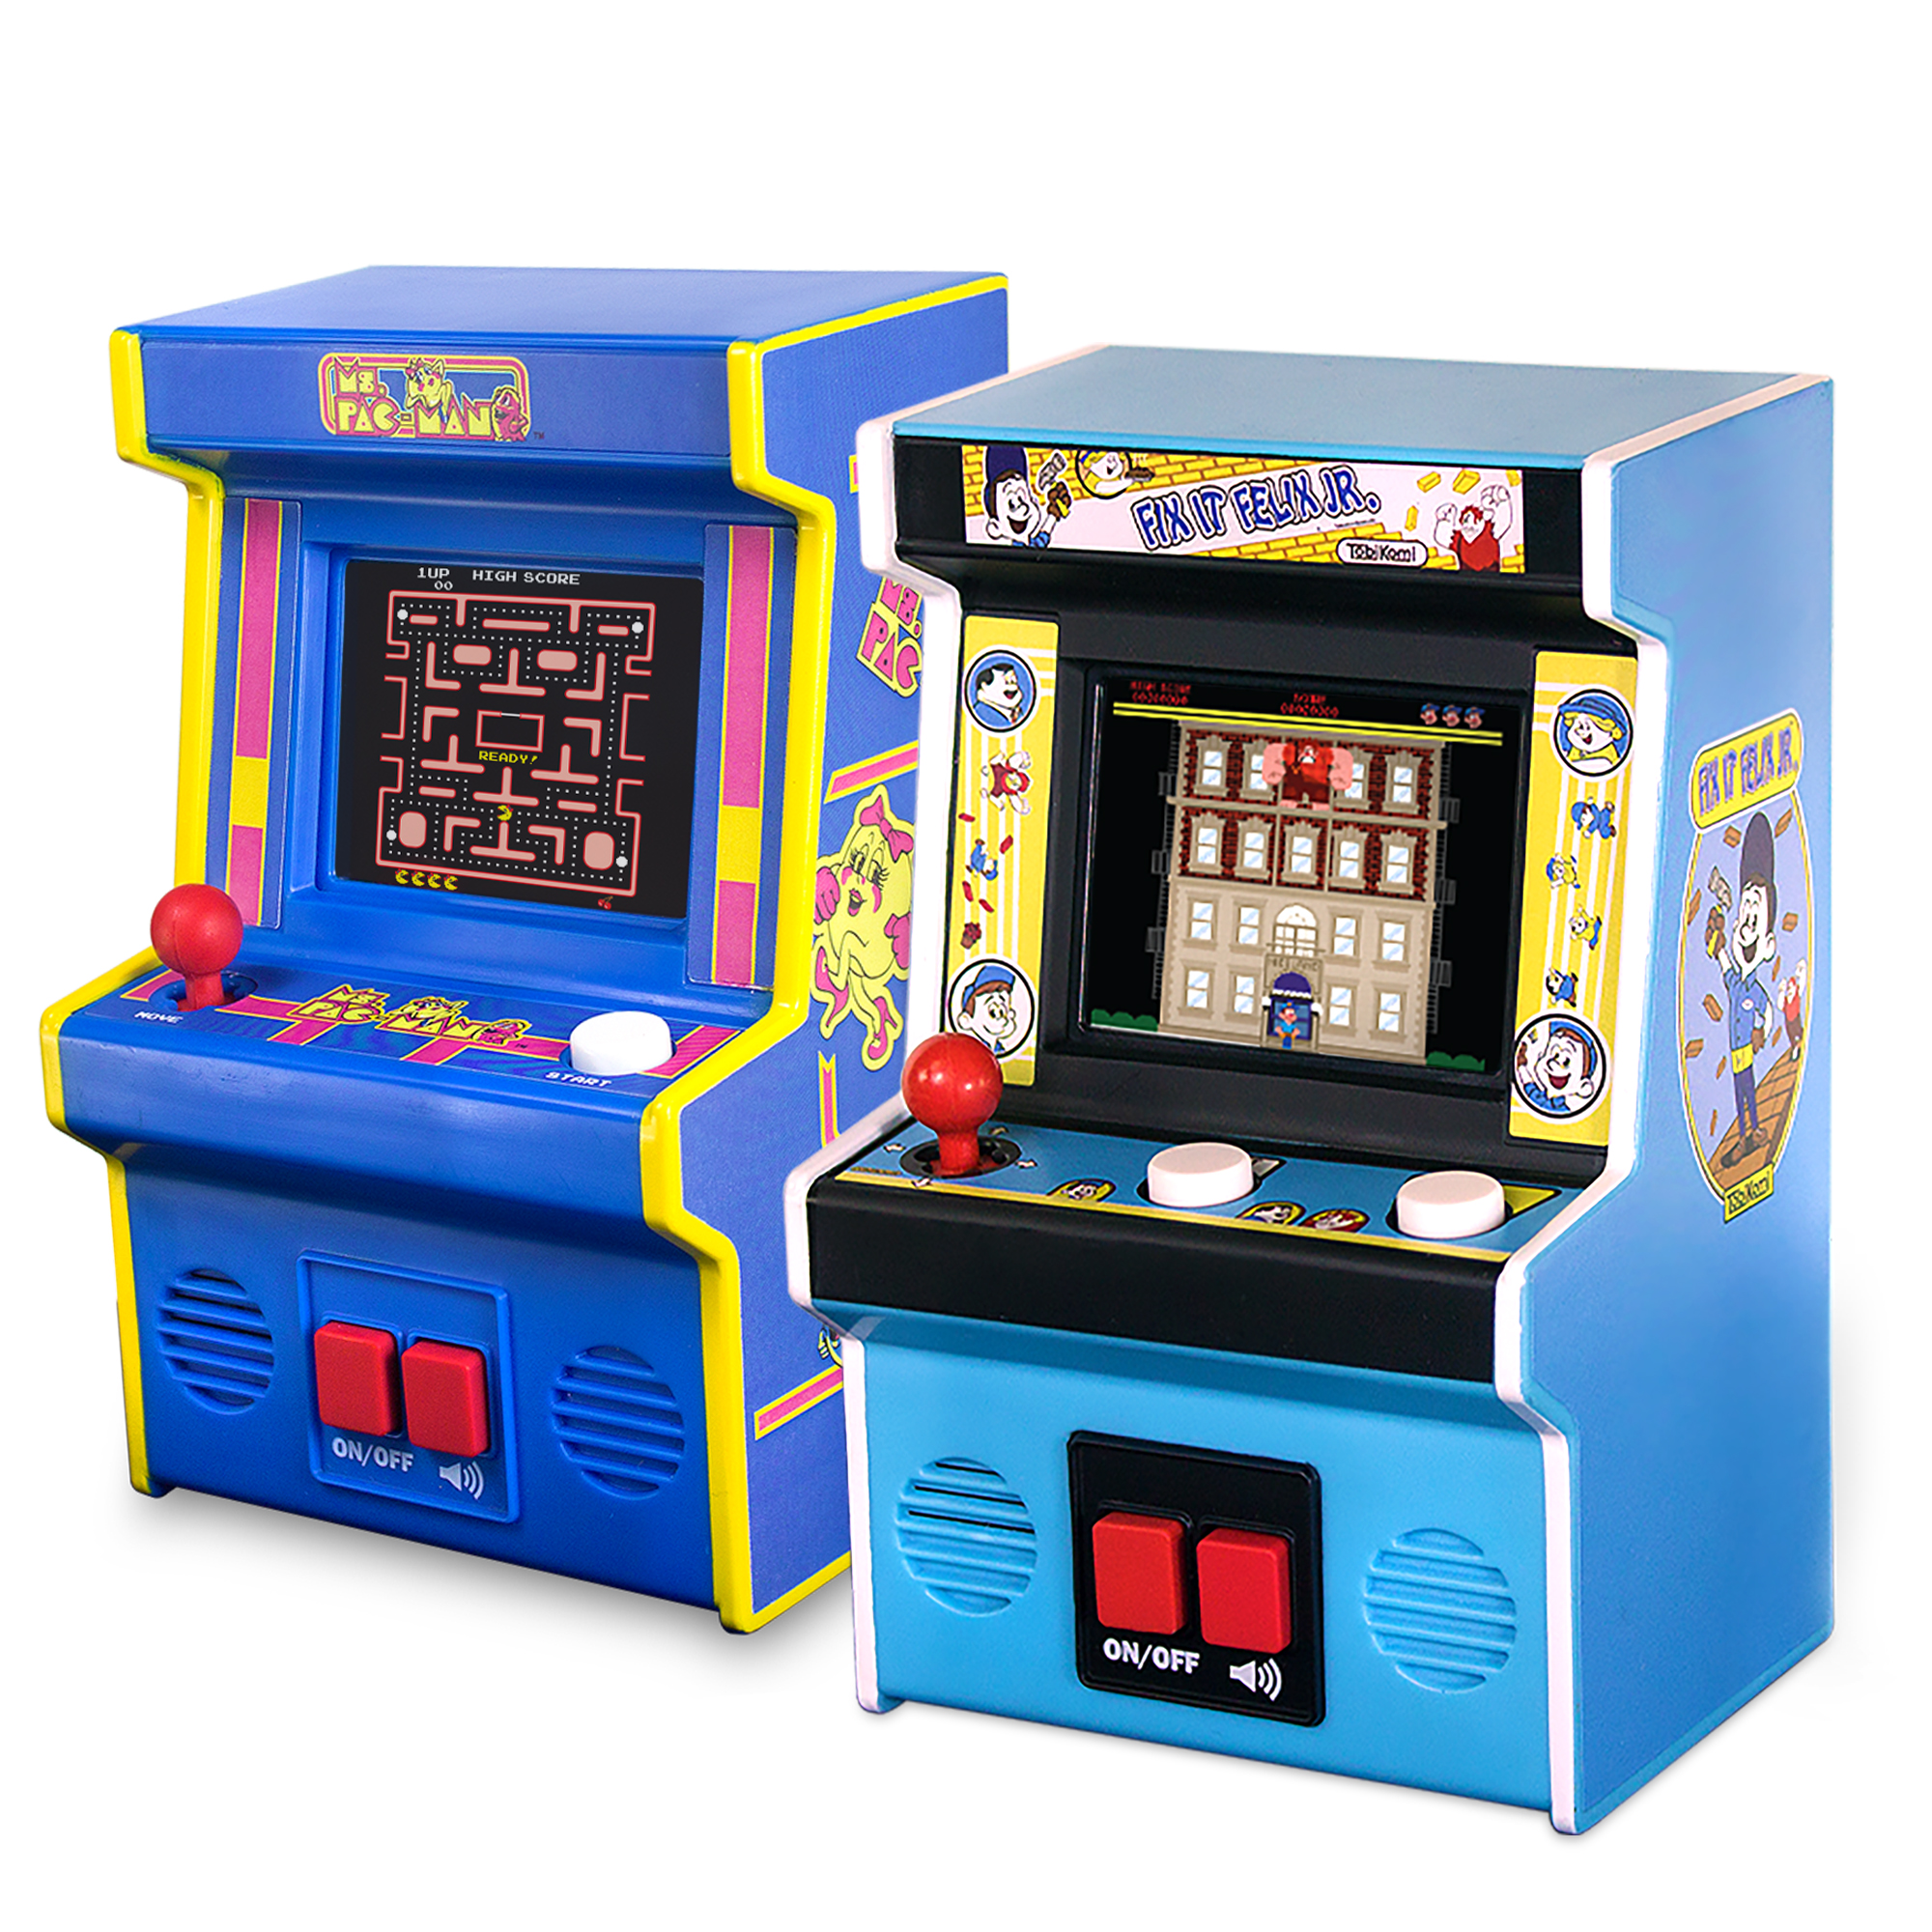 Arcade Classics Bundle Pack Ms Pac-Man Mini Arcade Game and Arcade Classics - Fix It Felix Mini Arcade Game - image 2 of 2